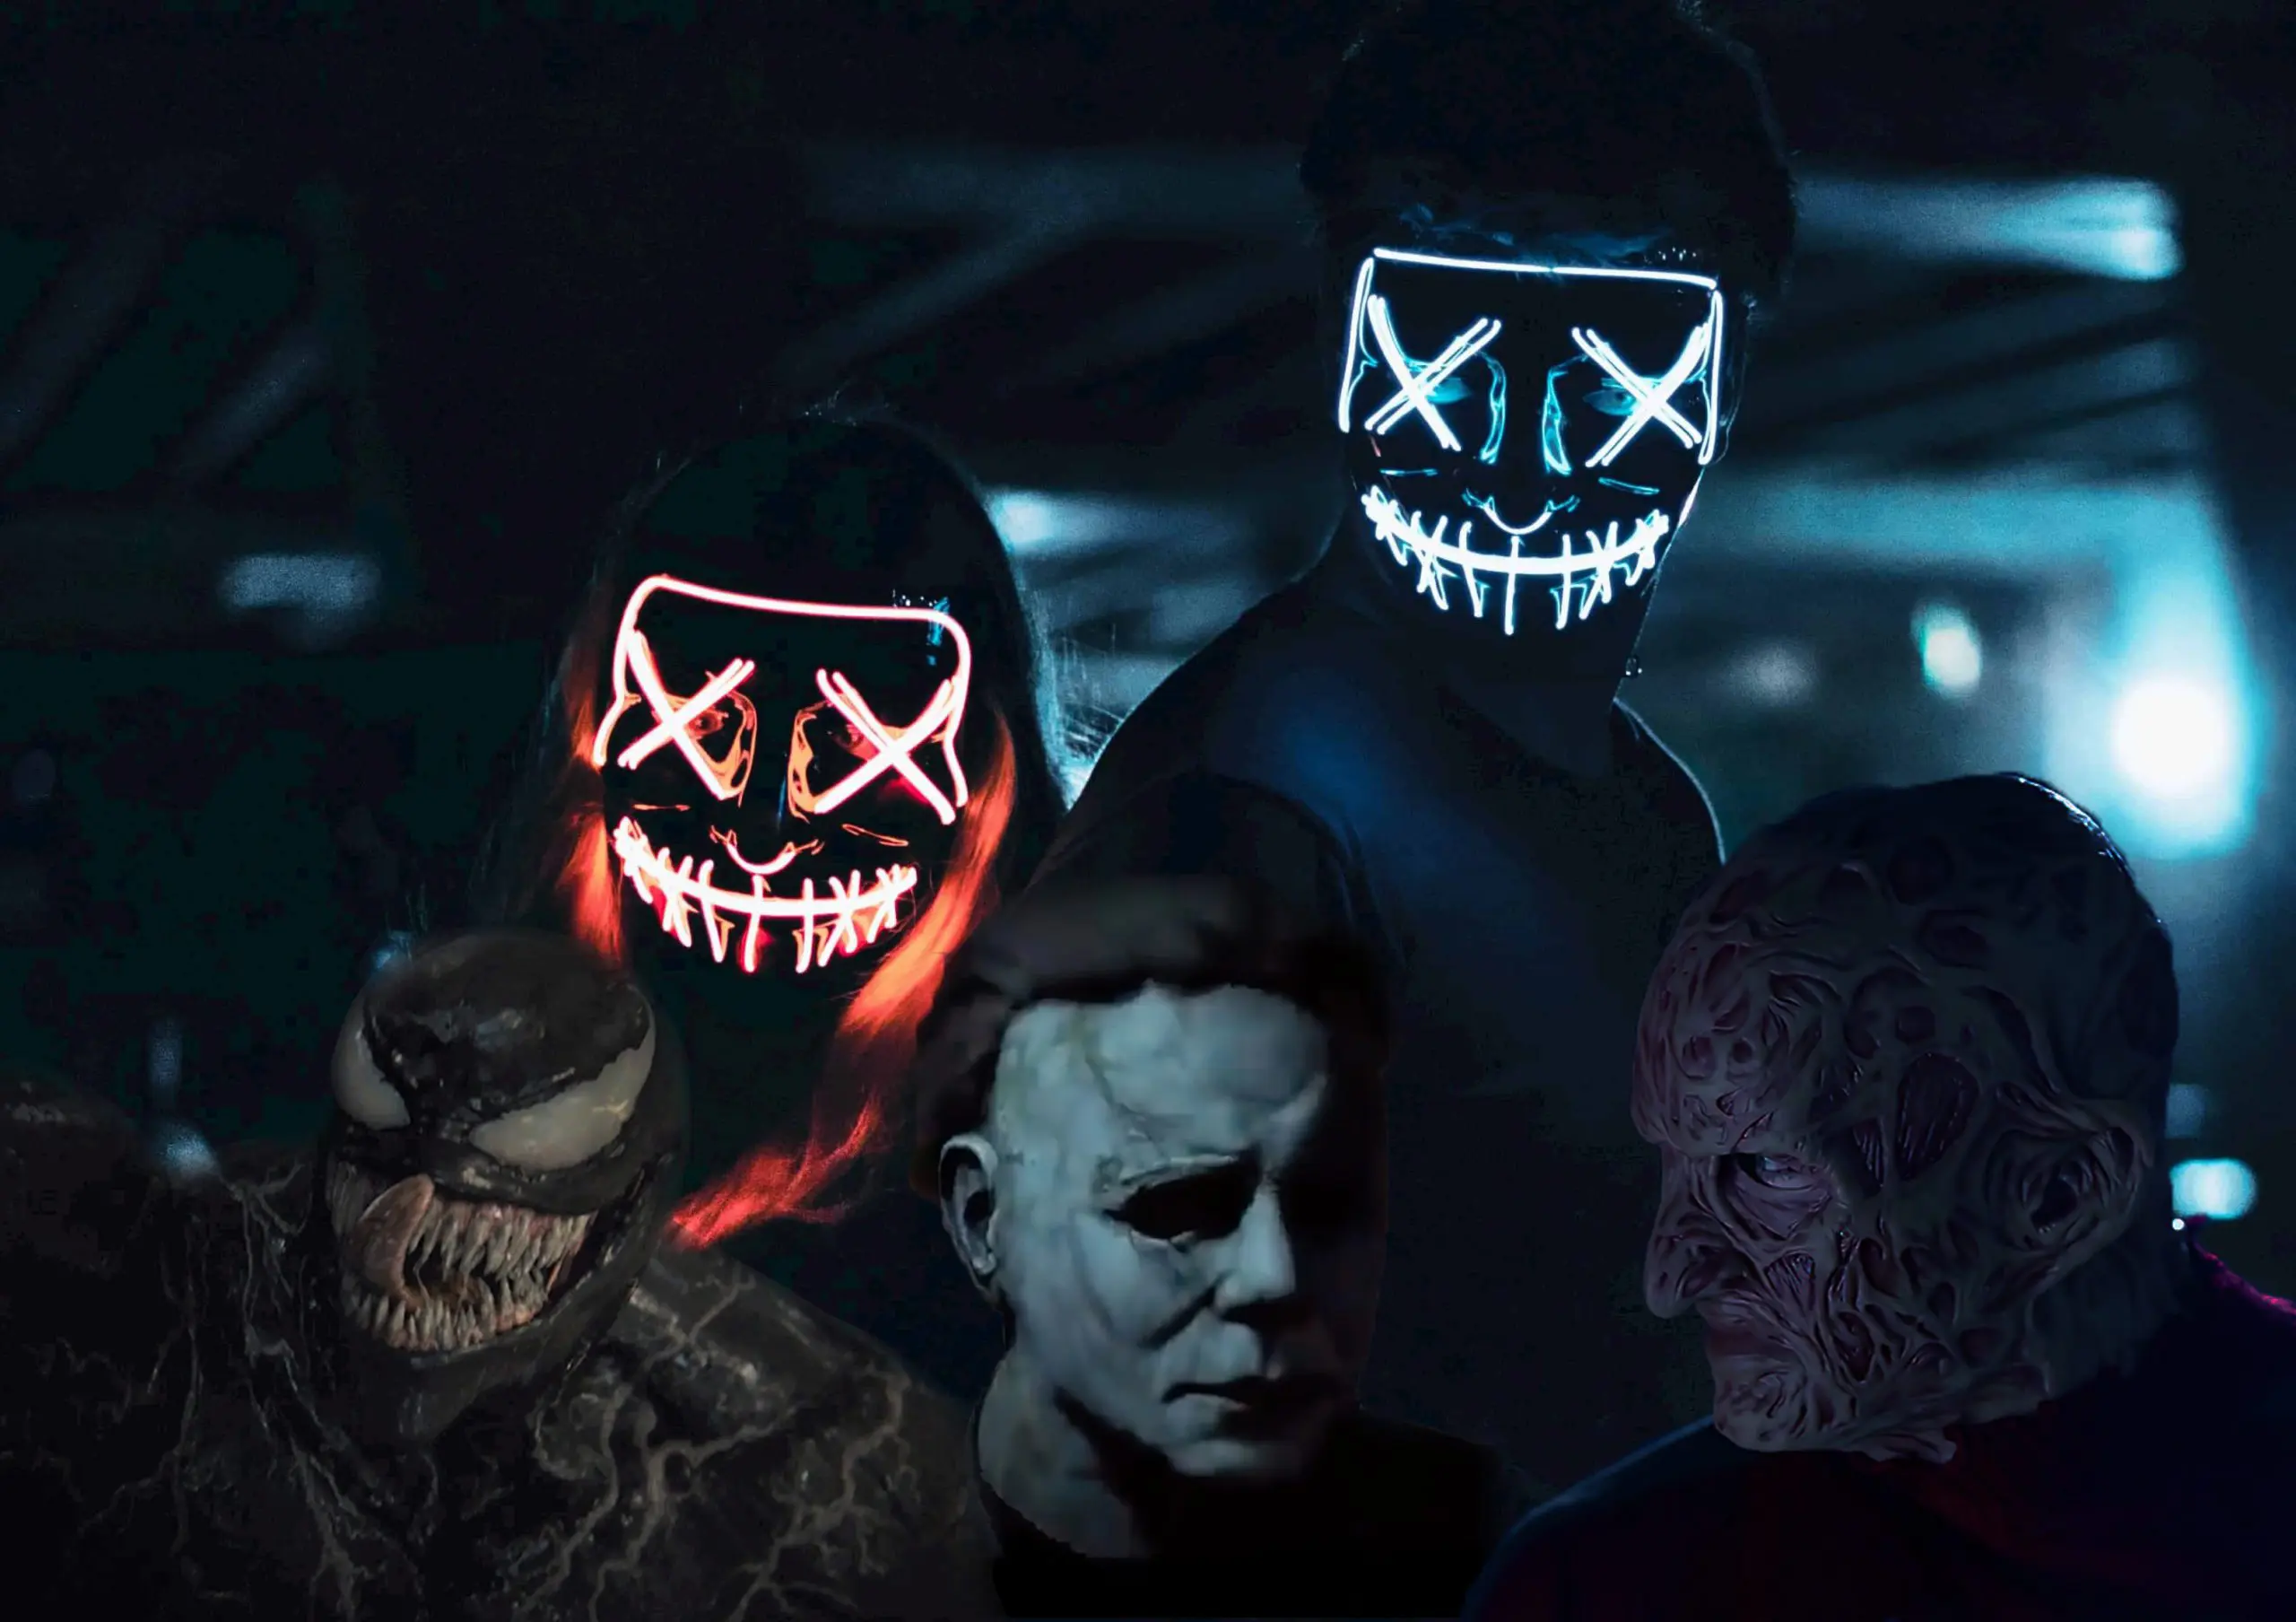 horrifiq halloween face masks showing myers, venom, freddy krueger and led purge masks